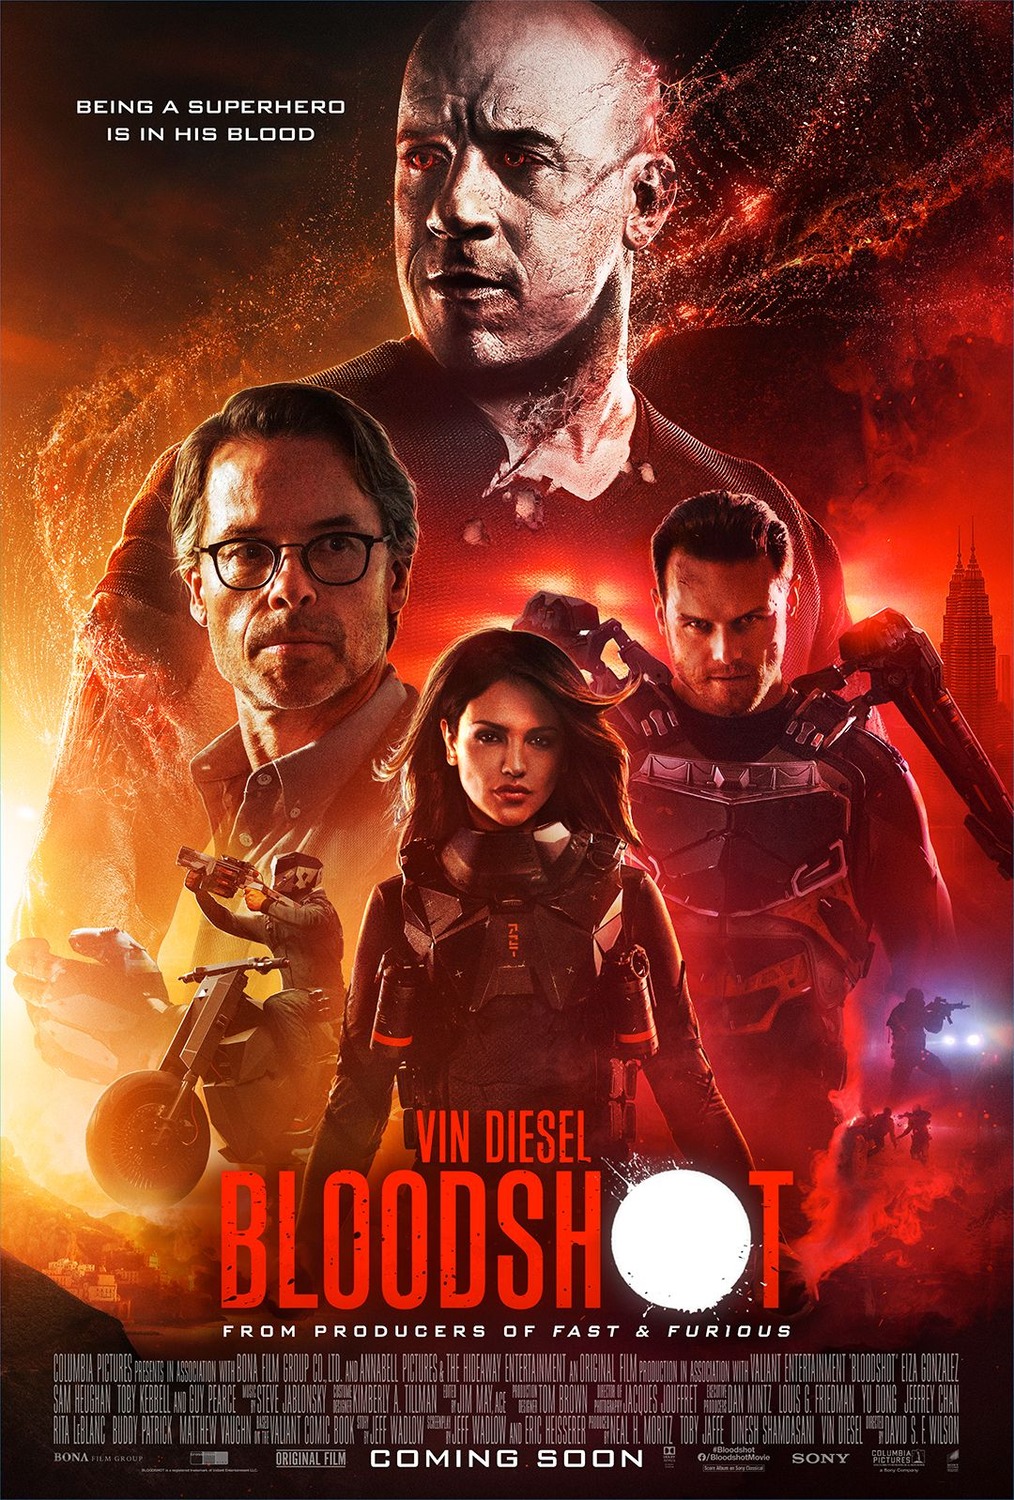 Extra Large Movie Poster Image for Bloodshot (#5 of 5)